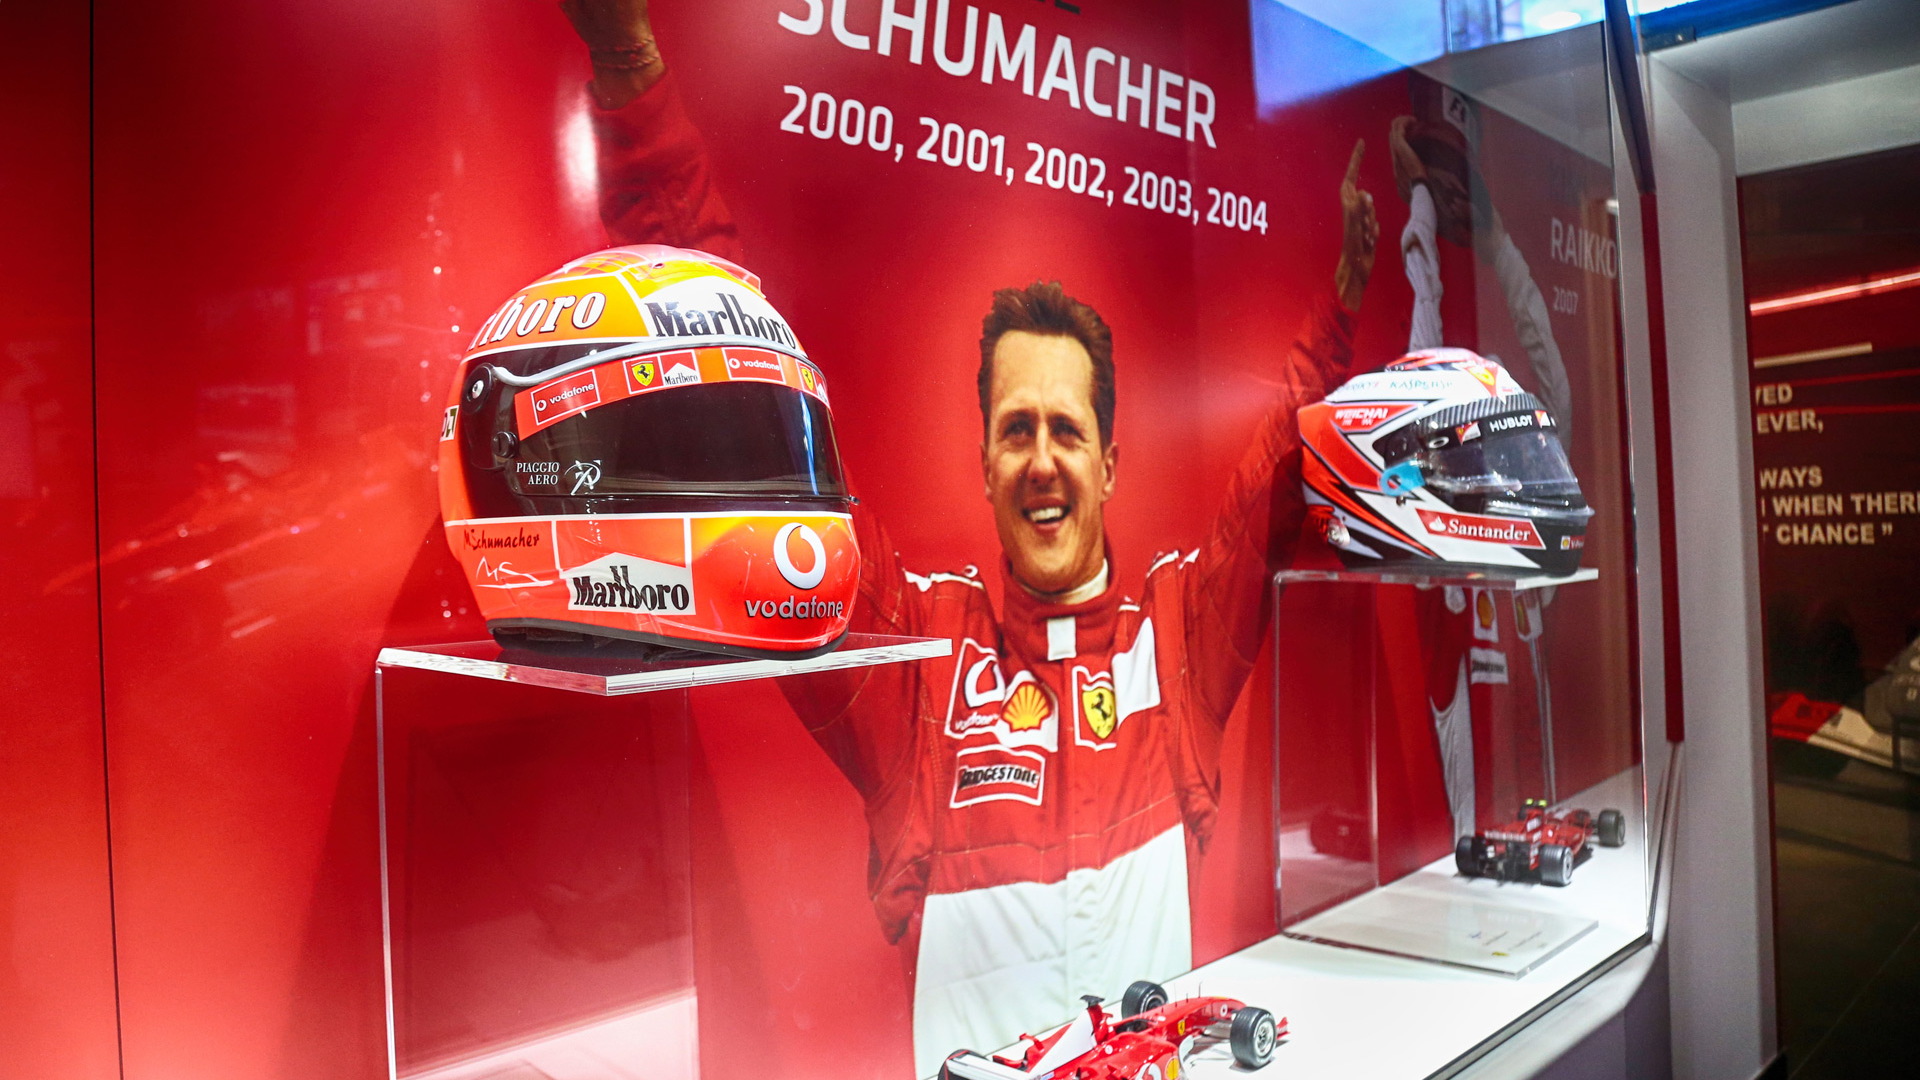 Michael 50 - Michael Schumacher exhibition at the Ferrari Museum